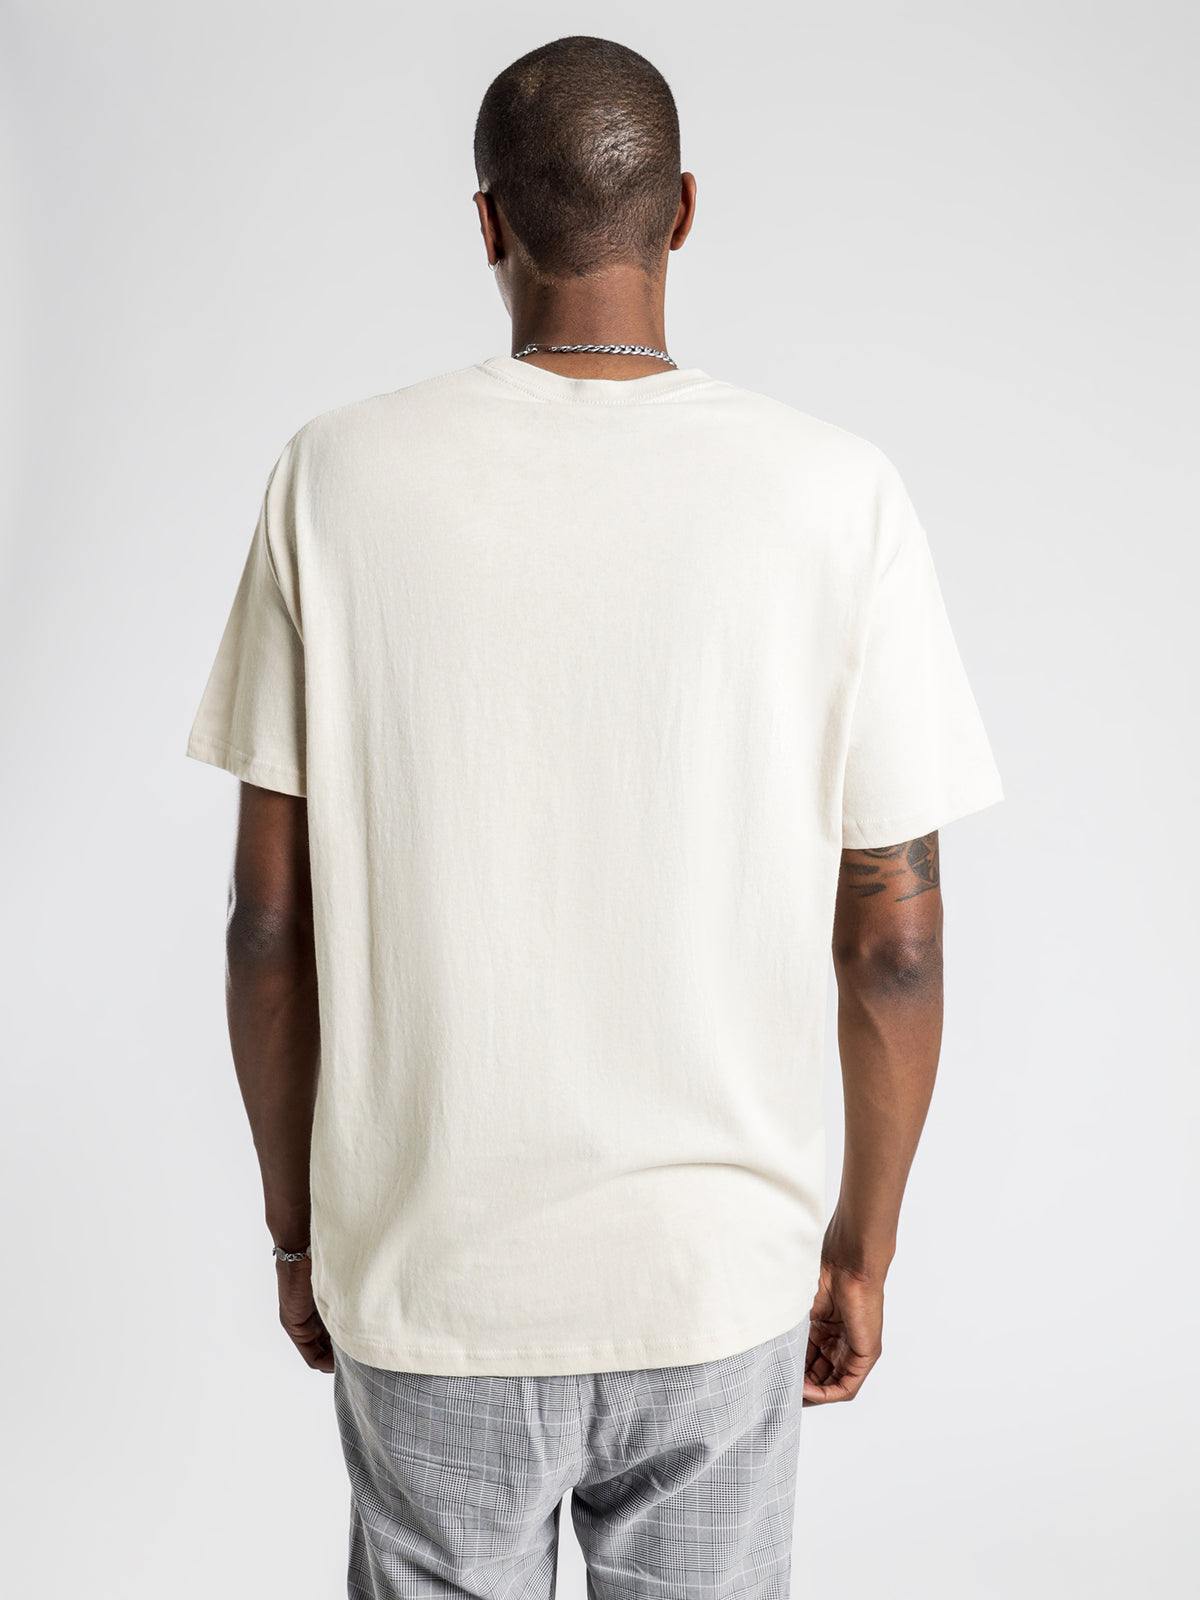 Graffiti Pocket Short Sleeve T-Shirt in Warmed White